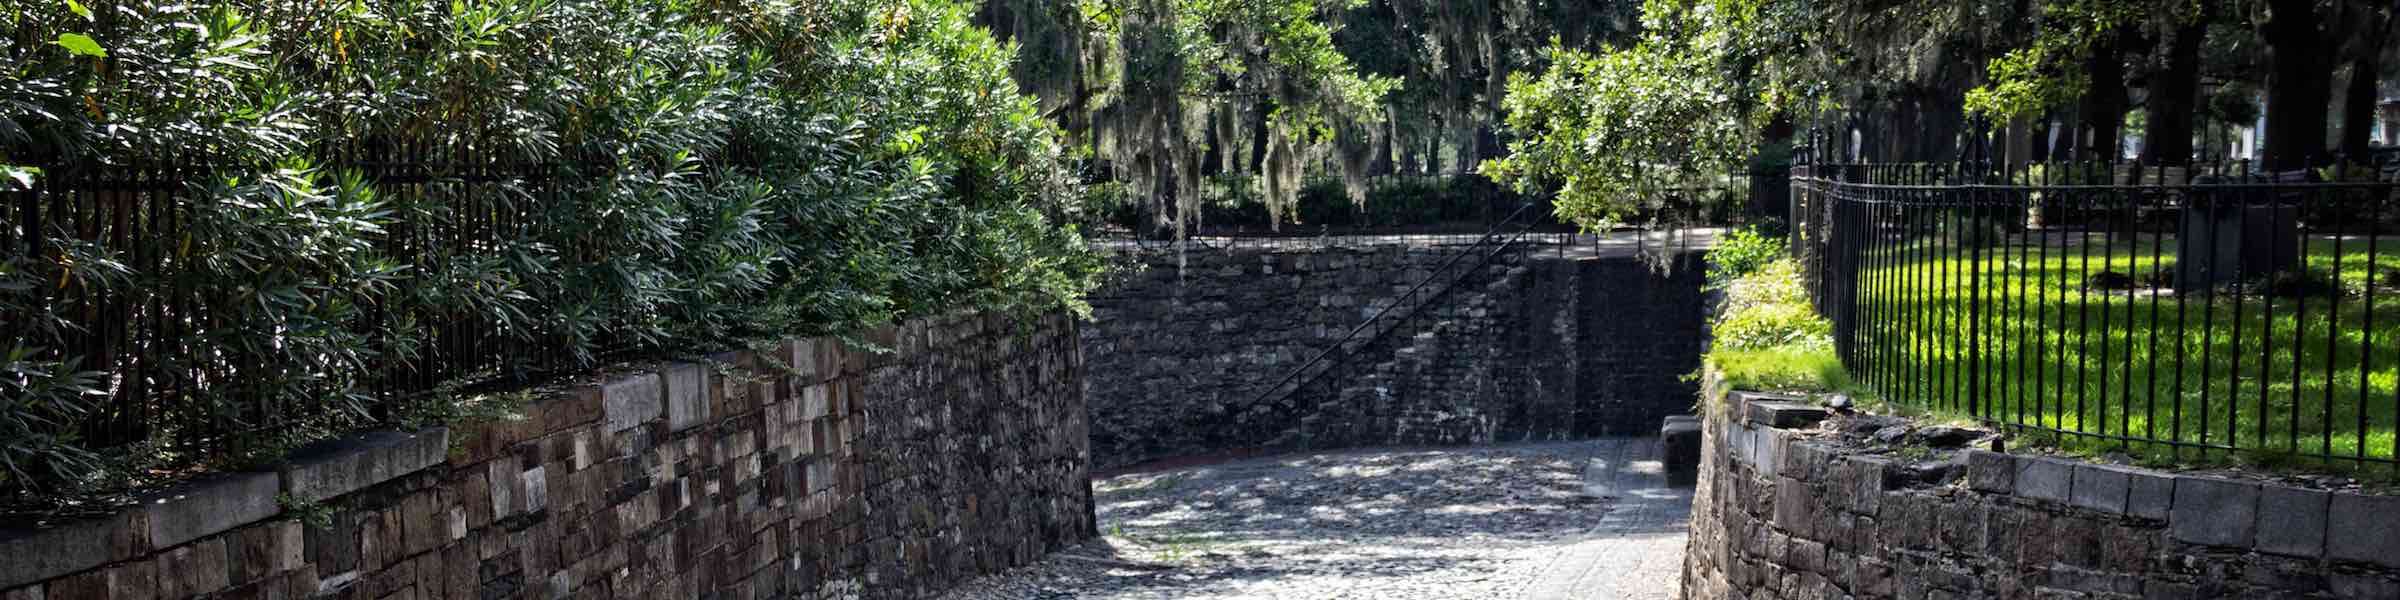 Cobblestone ramp and walls around the perimeter of Emmet Park, Savannah, GA.